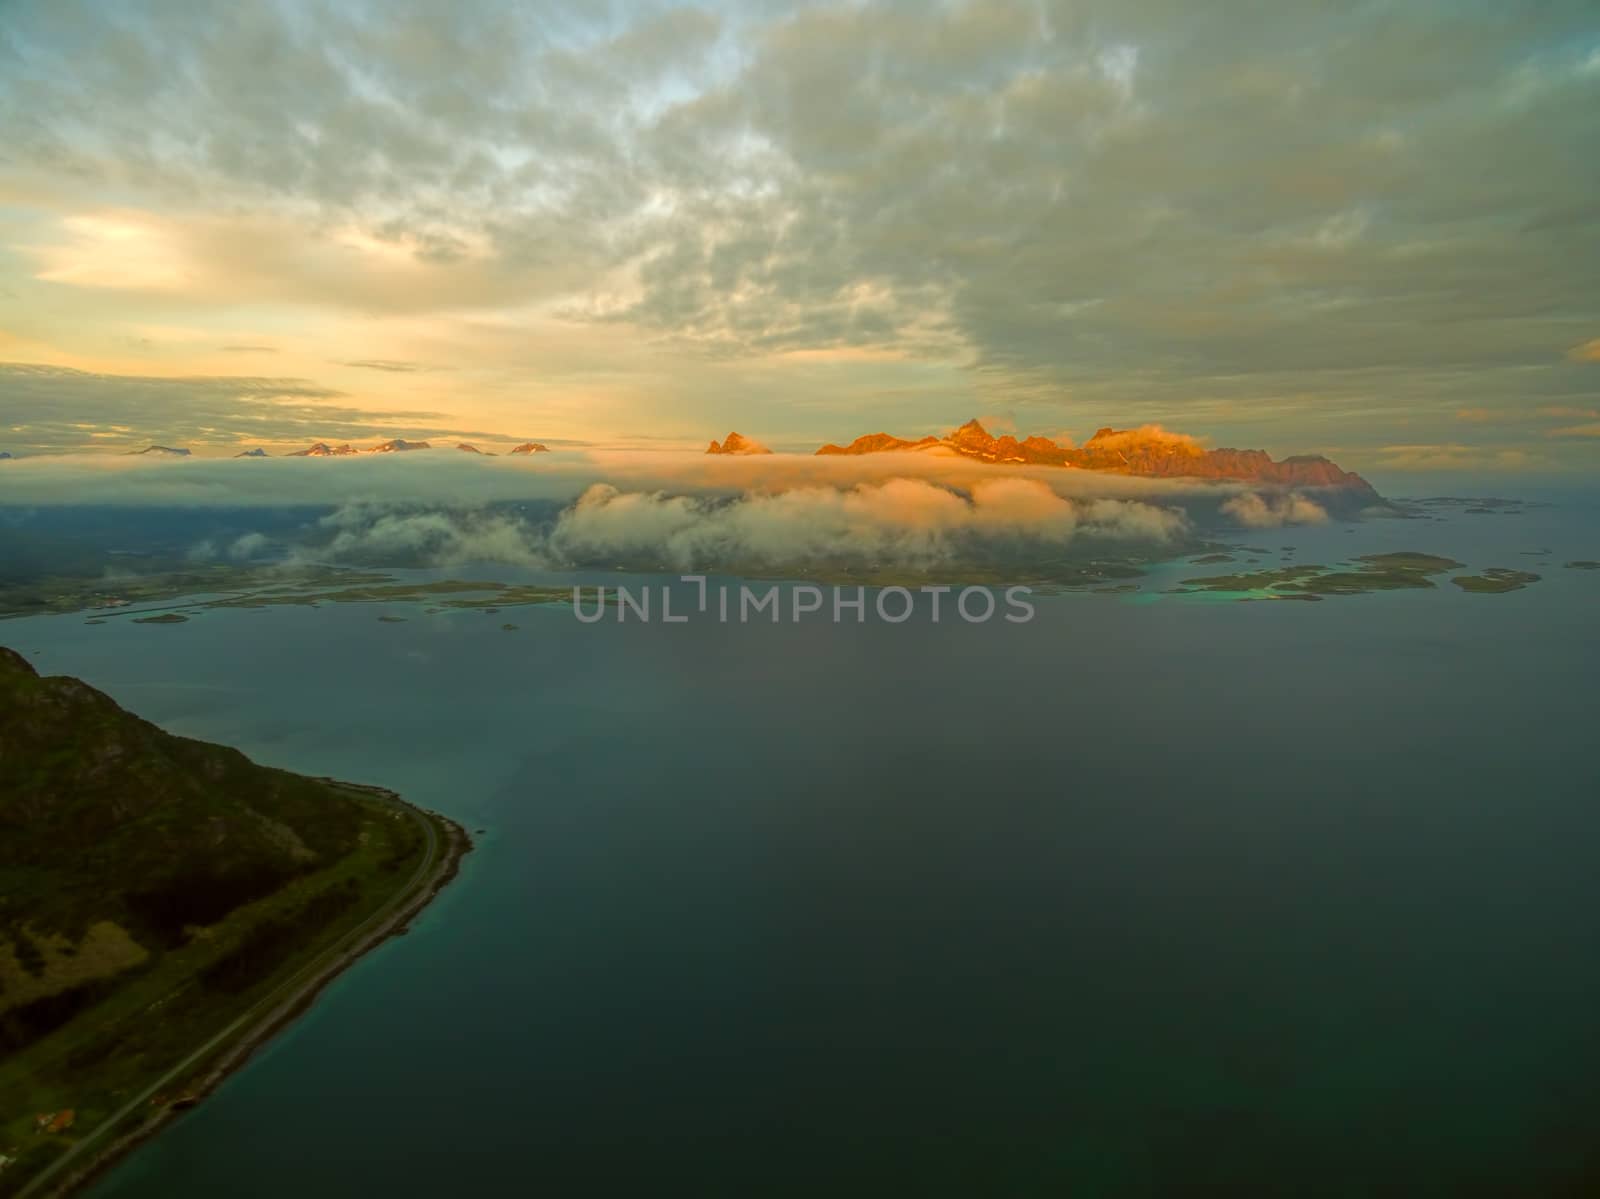 Magnificent peaks on Lofoten islands in Norway lit by midnight sun